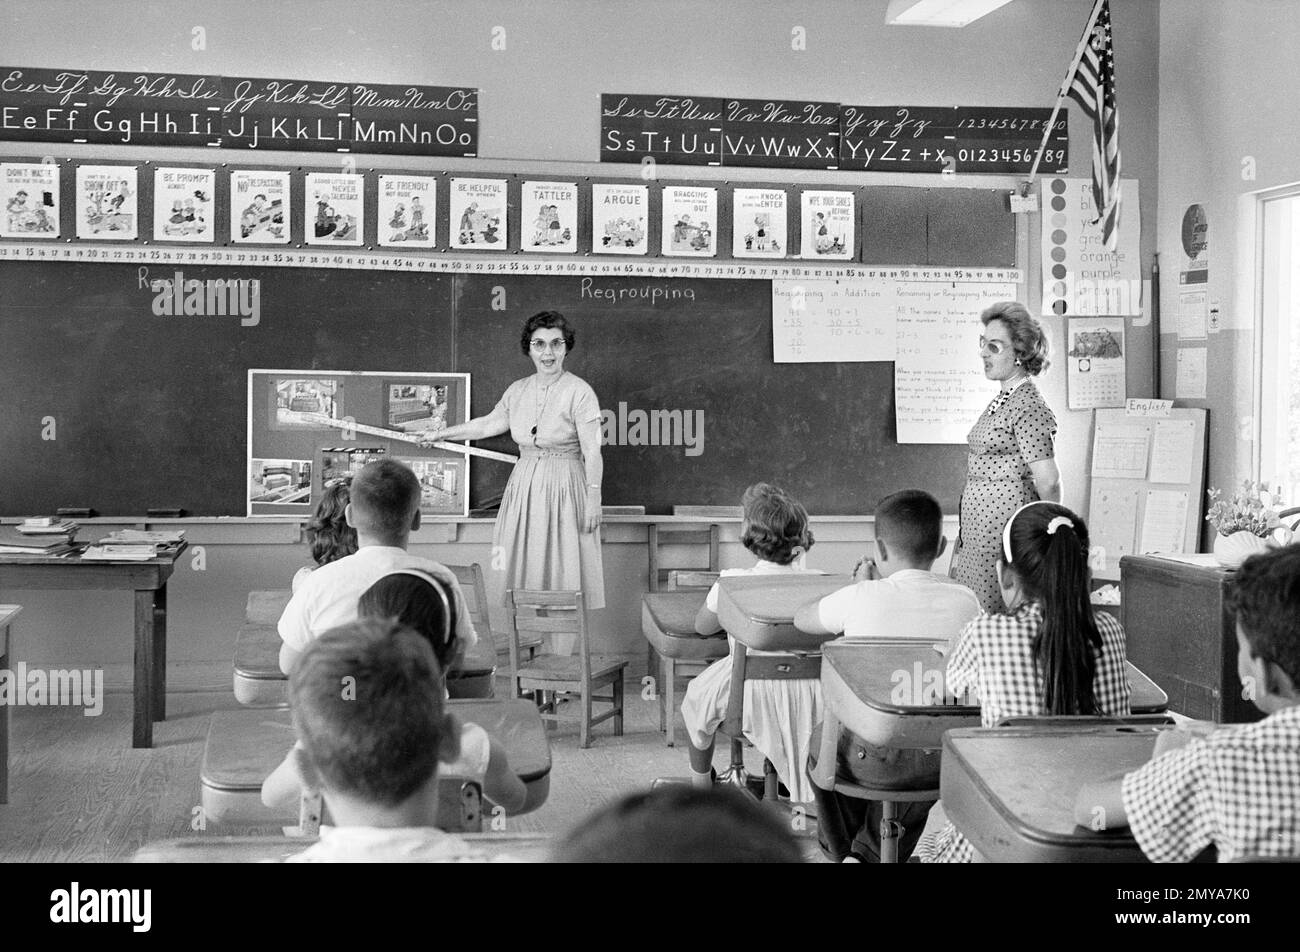 Studenti rifugiati cubani e insegnanti in aula, Miami, Florida, USA, Thomas J. o'Halloran, STATI UNITI News & World Report Magazine Photograph Collection, aprile 1963 Foto Stock